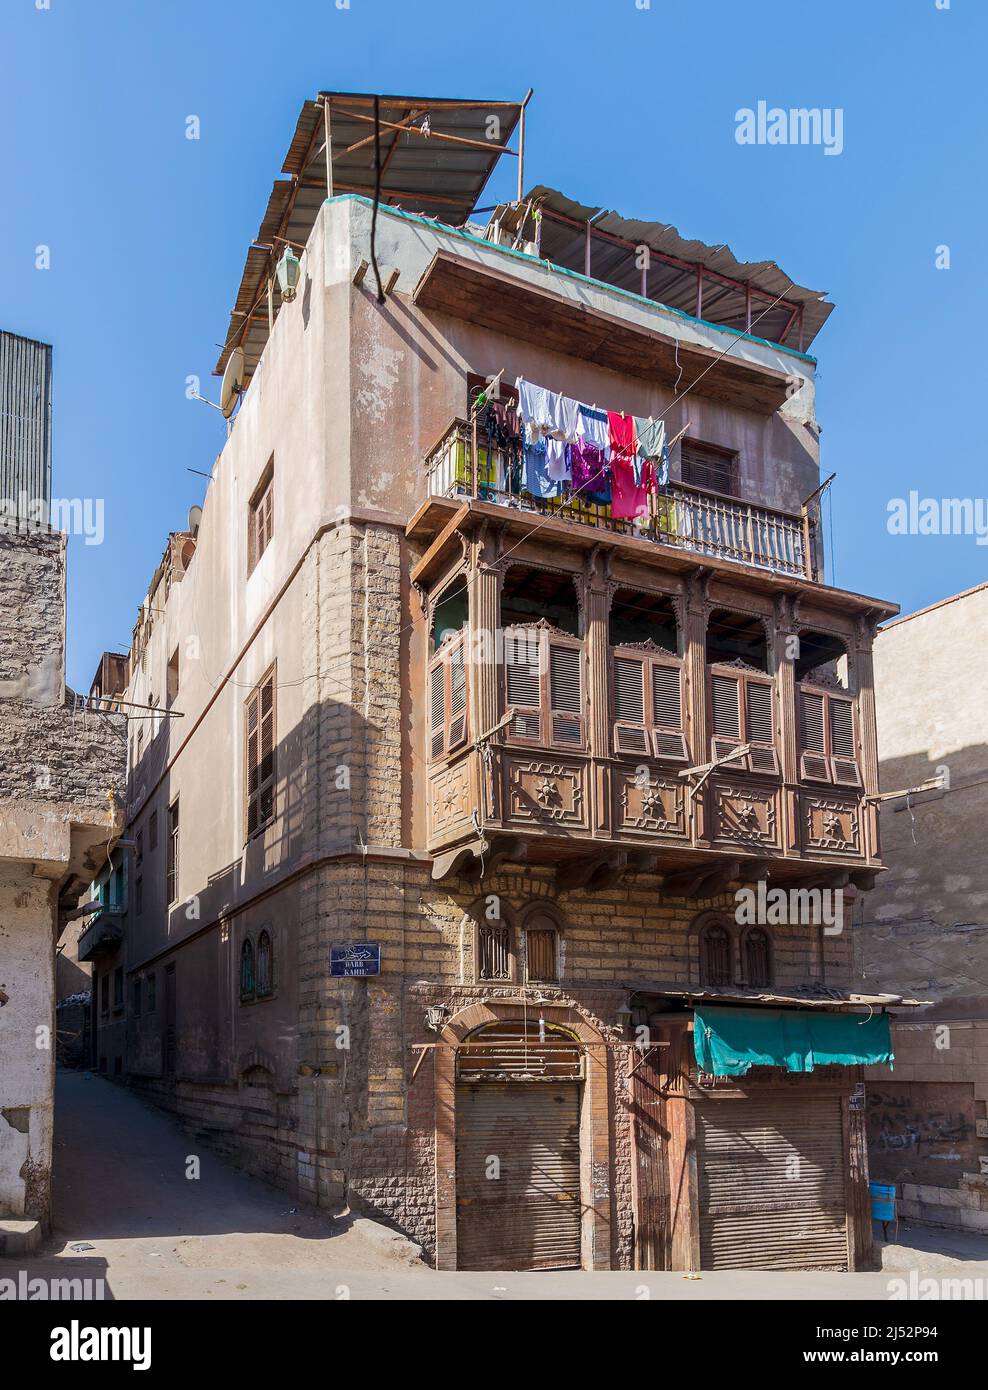 Ventana estilo oriel Mamluk de la era con rejilla de madera intercalada - Mashrabiya, en una pared externa en mal estado, en 1890 edificio residencial histórico conocido como Sokkar House, distrito de Bab Al Wazir, antiguo Cairo, Egipto Foto de stock